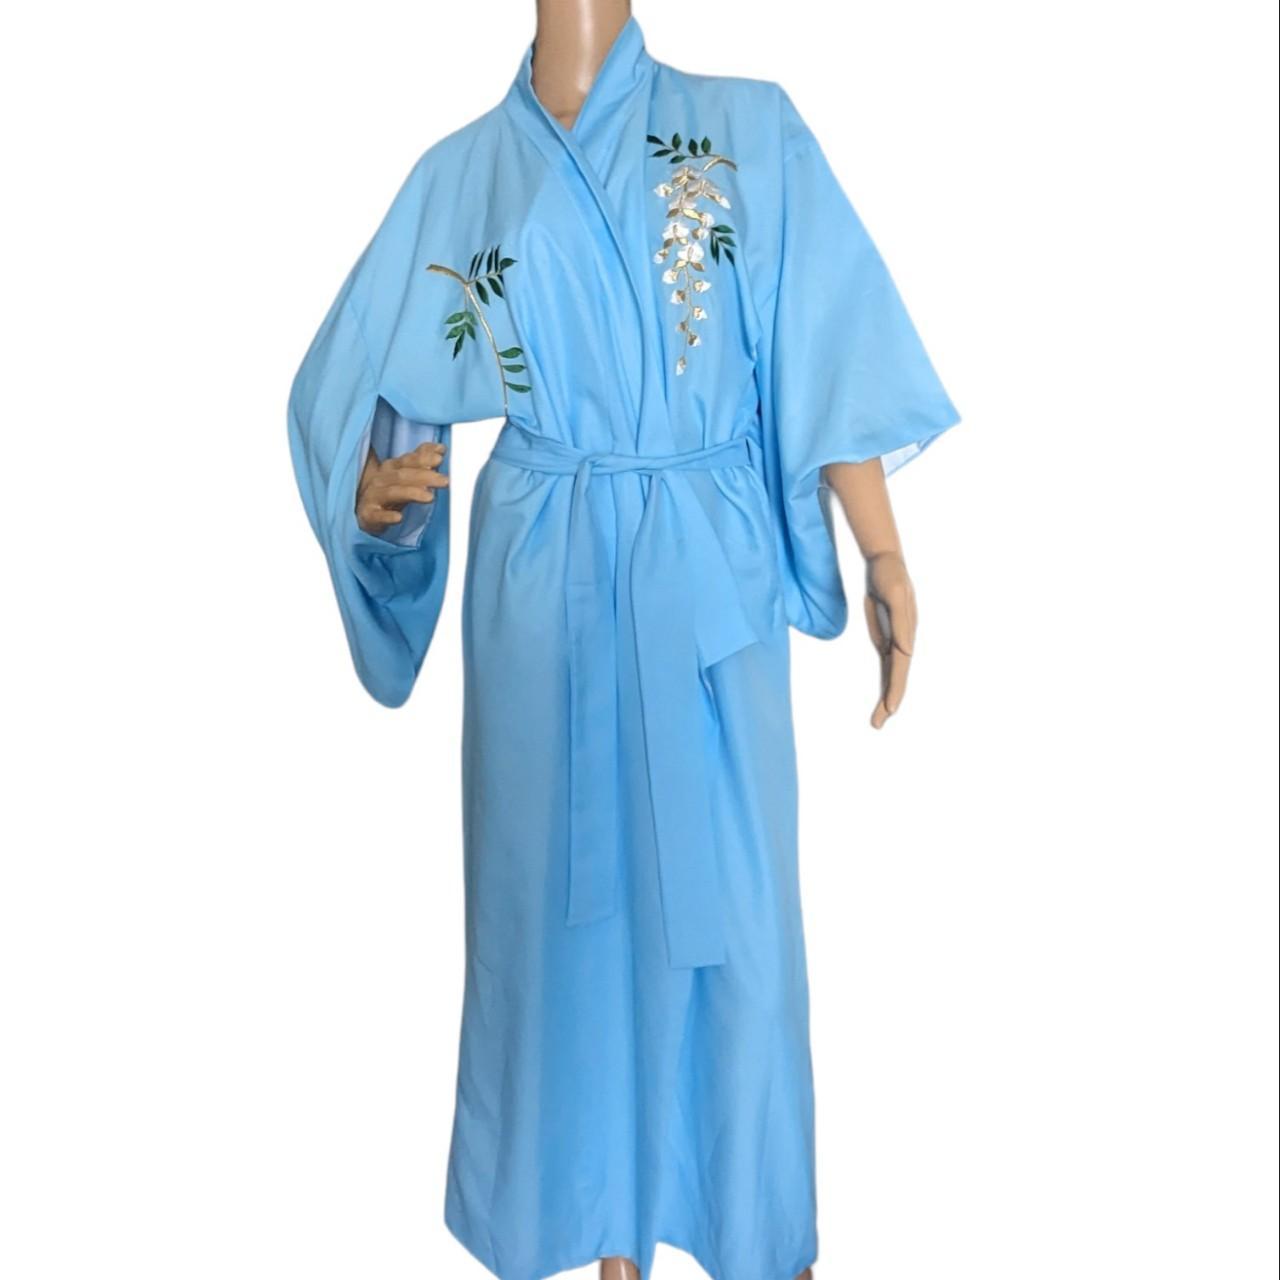 Monogrammed Satin Robe in Sky Blue